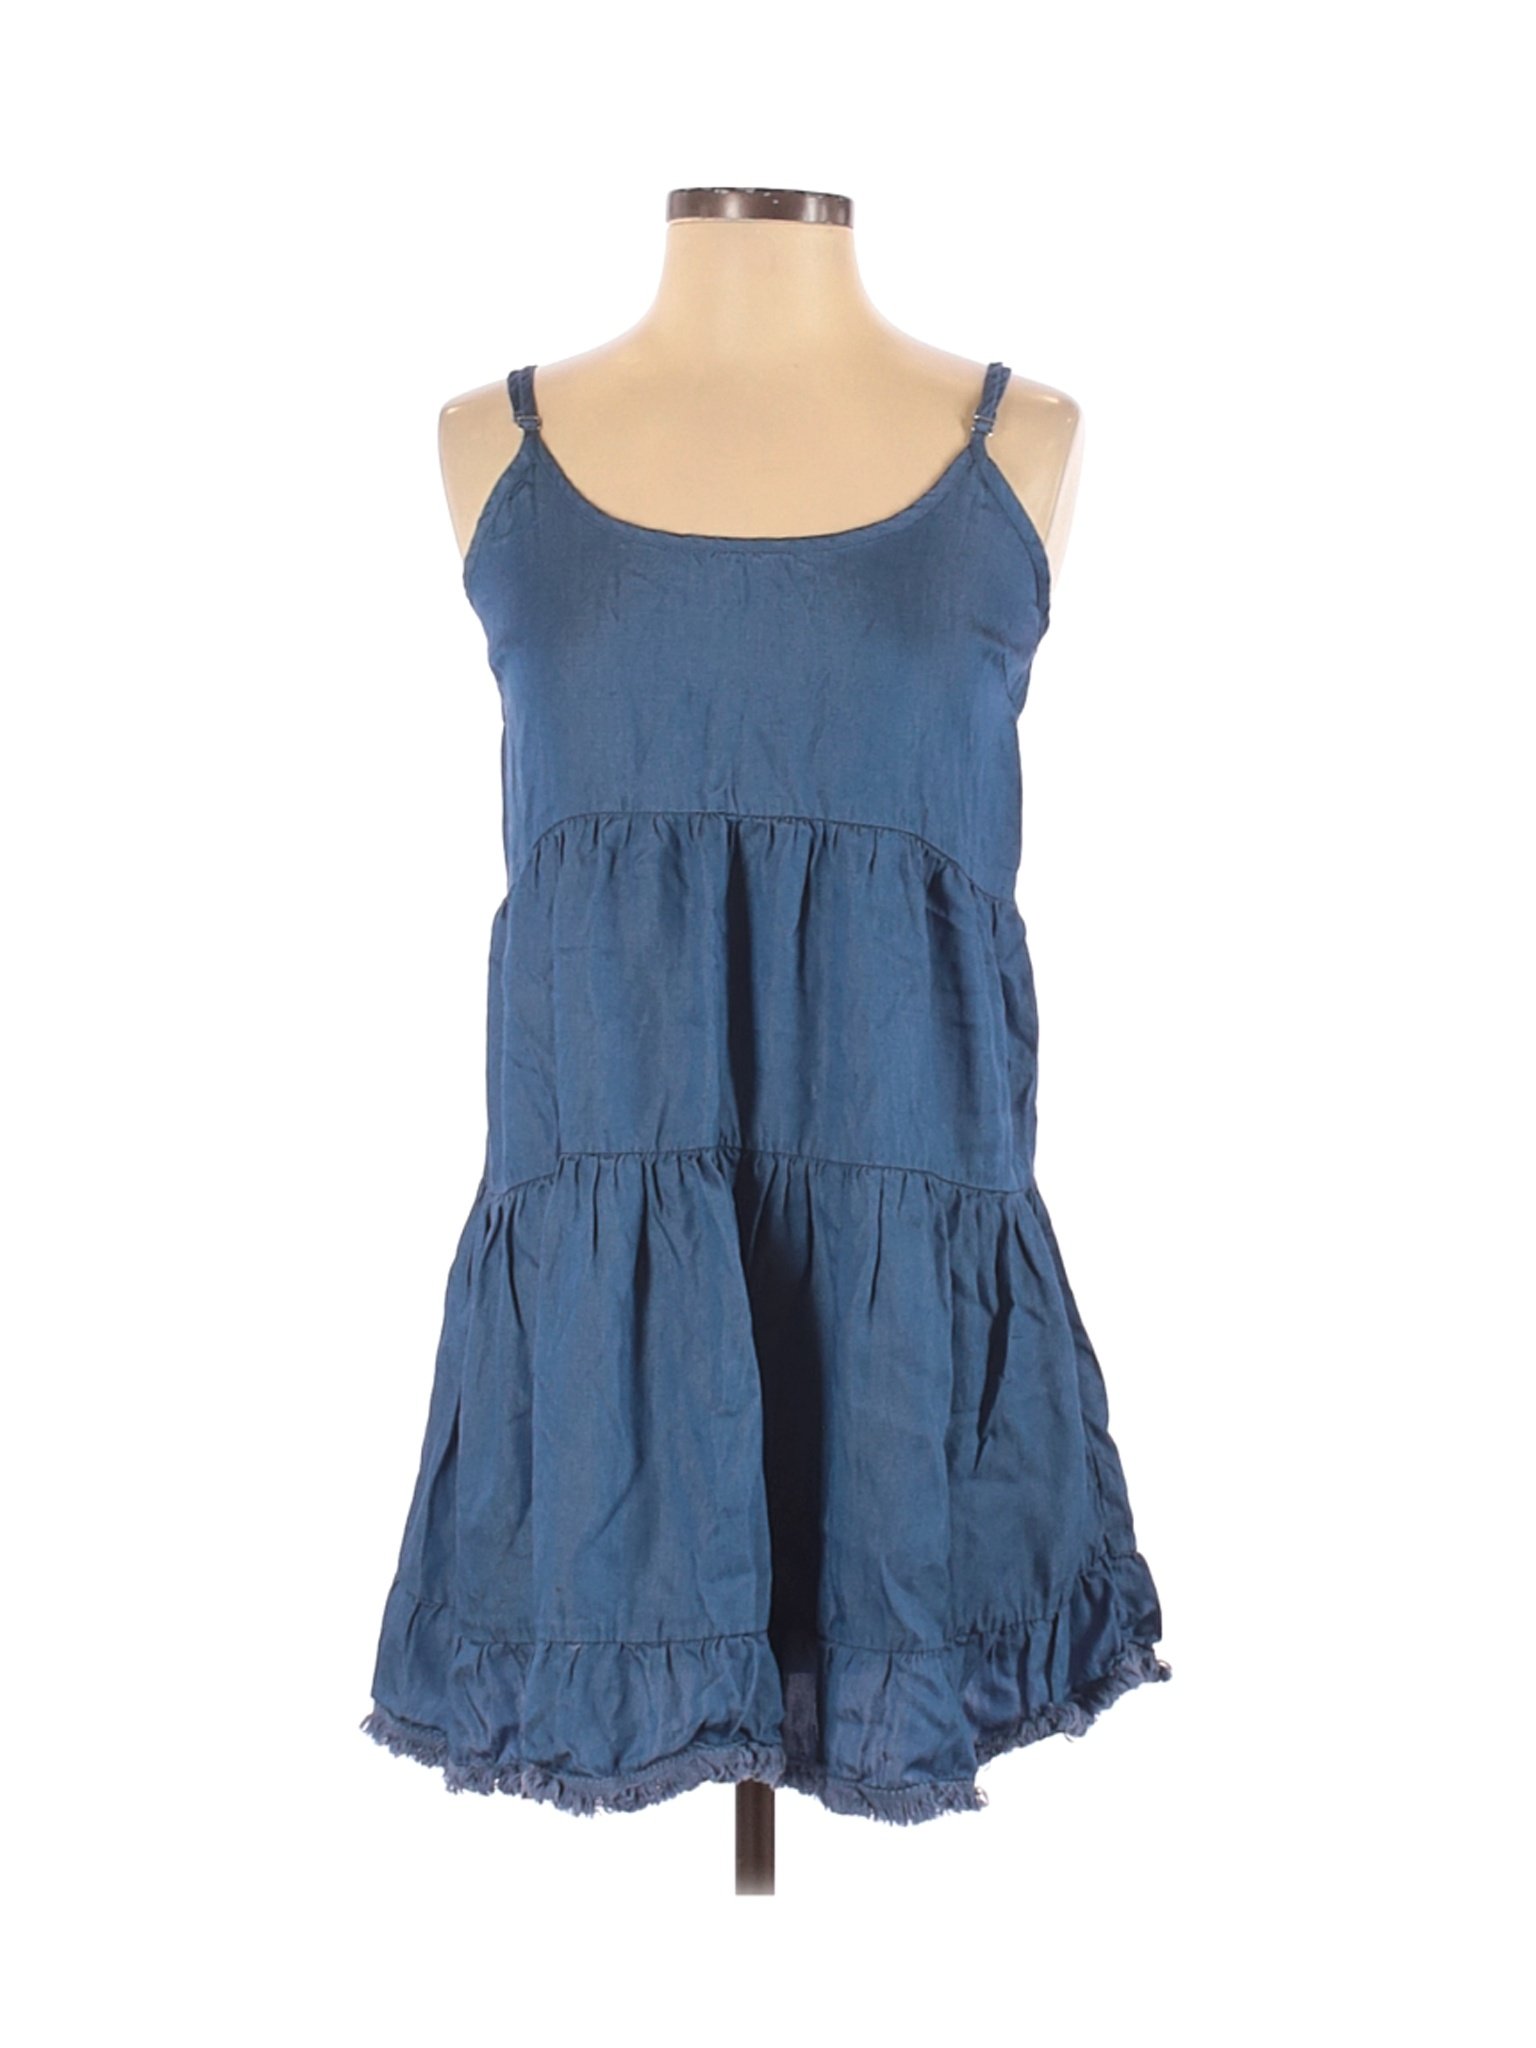 Umgee Women Blue Casual Dress S | eBay